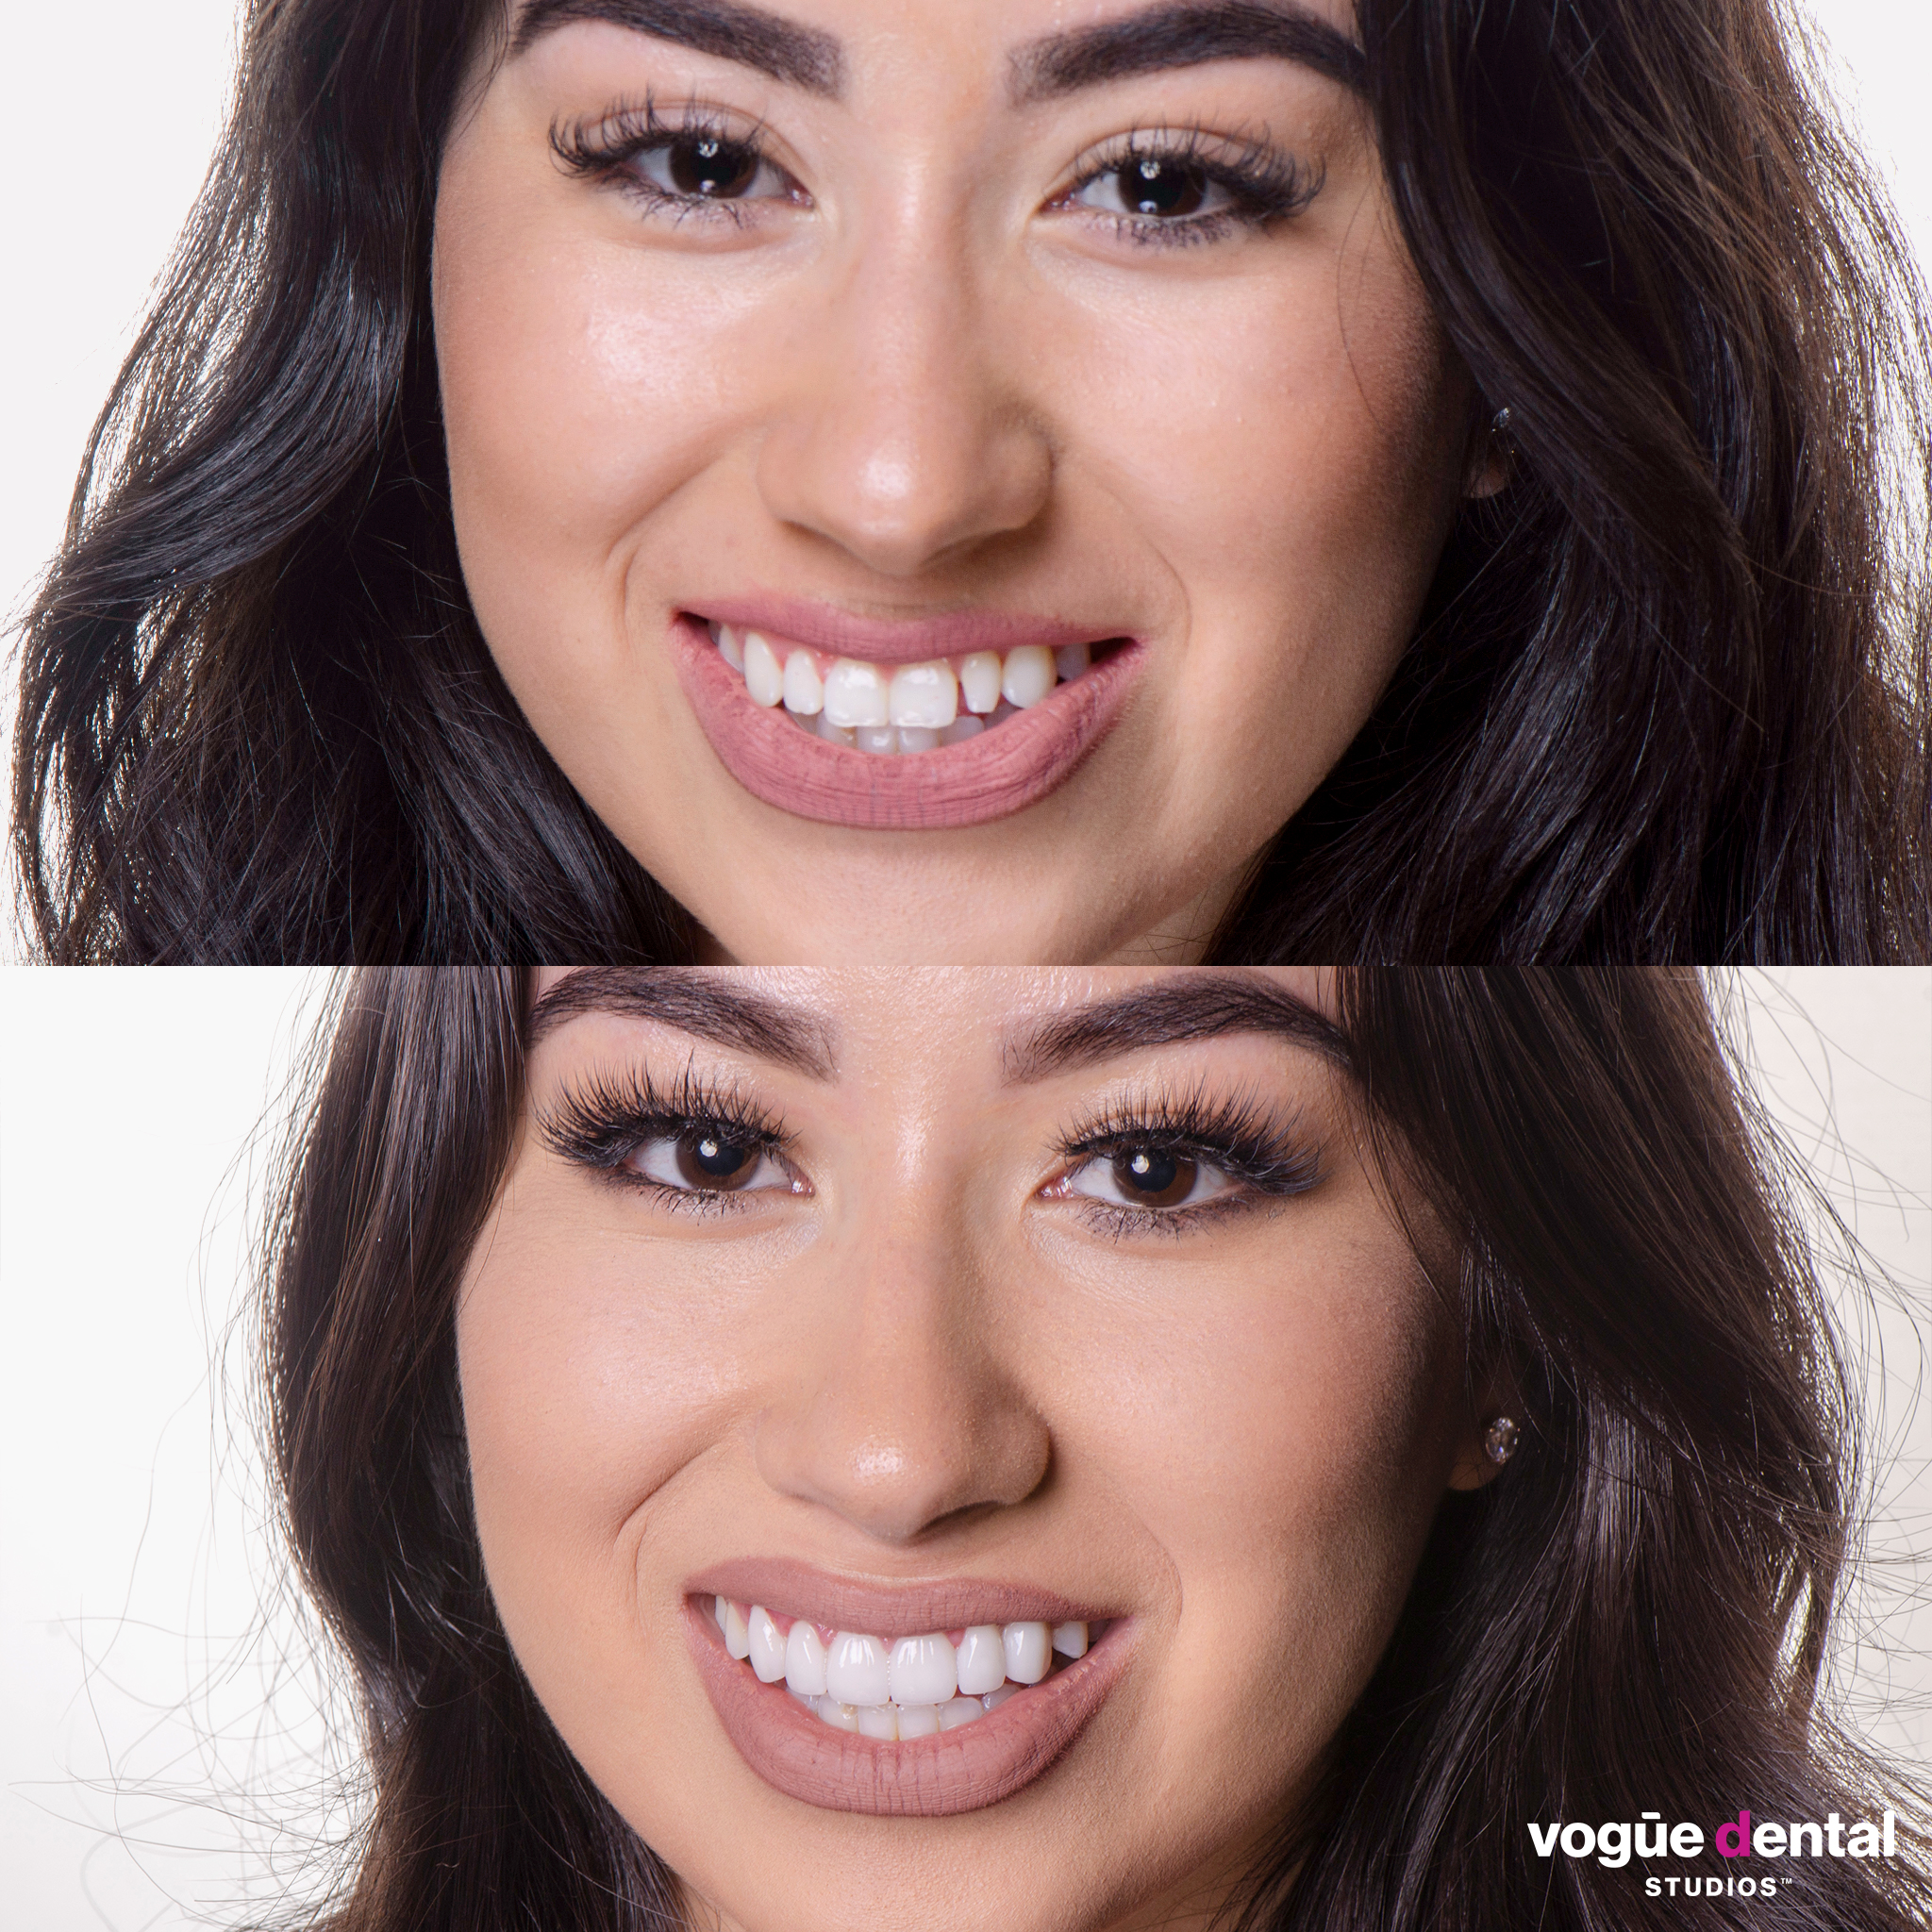 Before and after porcelain veneers at Vogue Dental Studios - Kristy